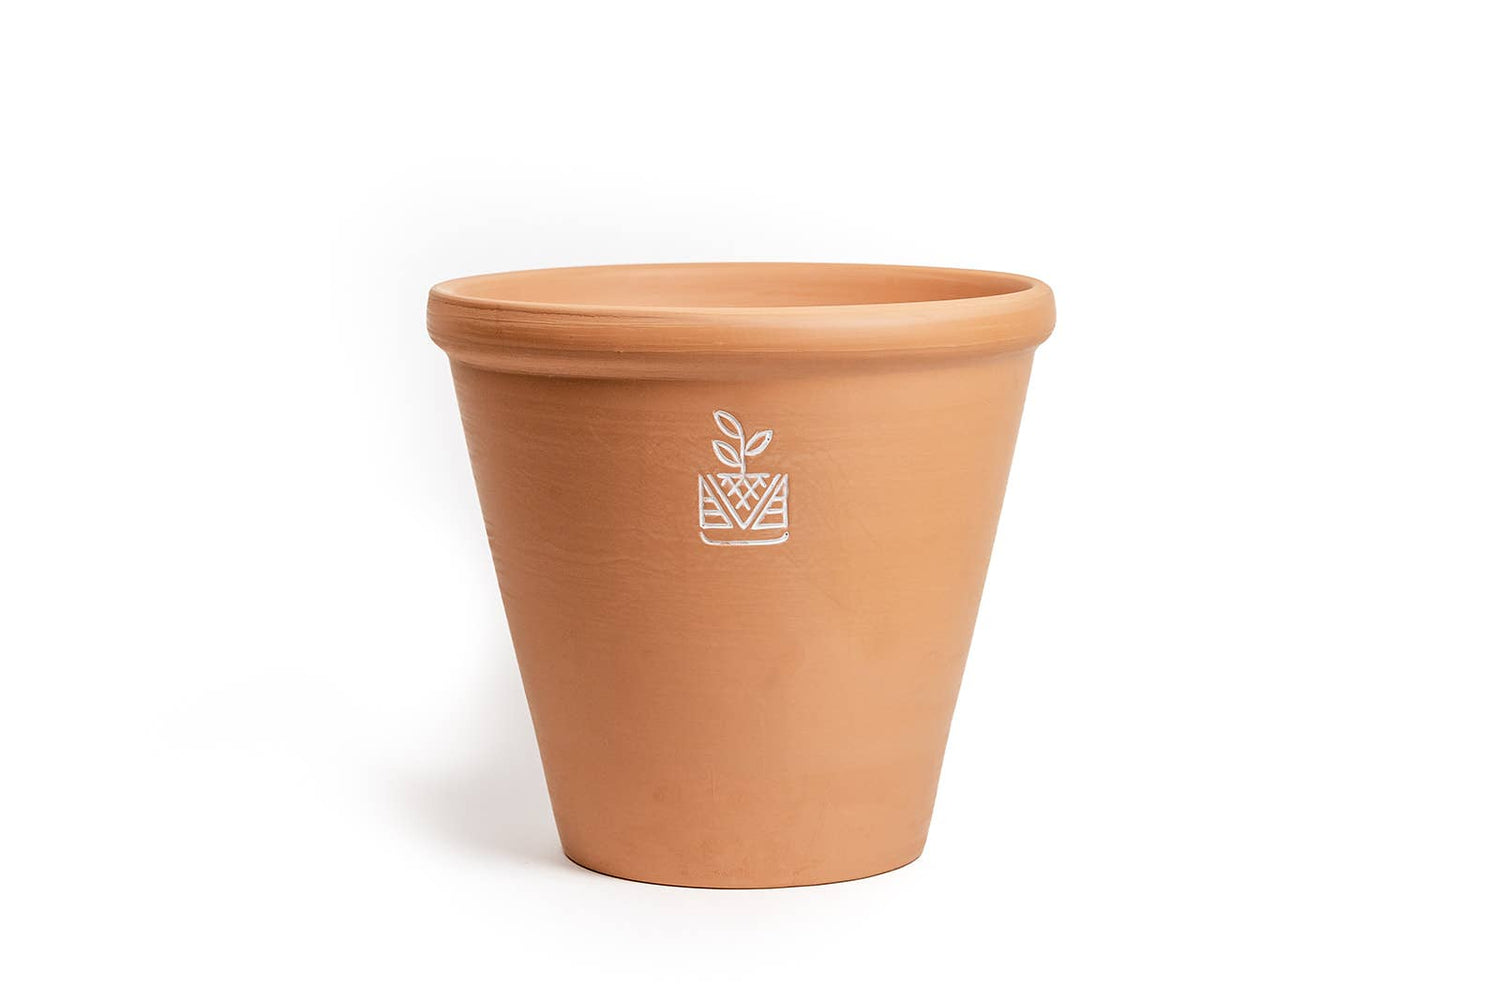 terra-cotta pot for live plants